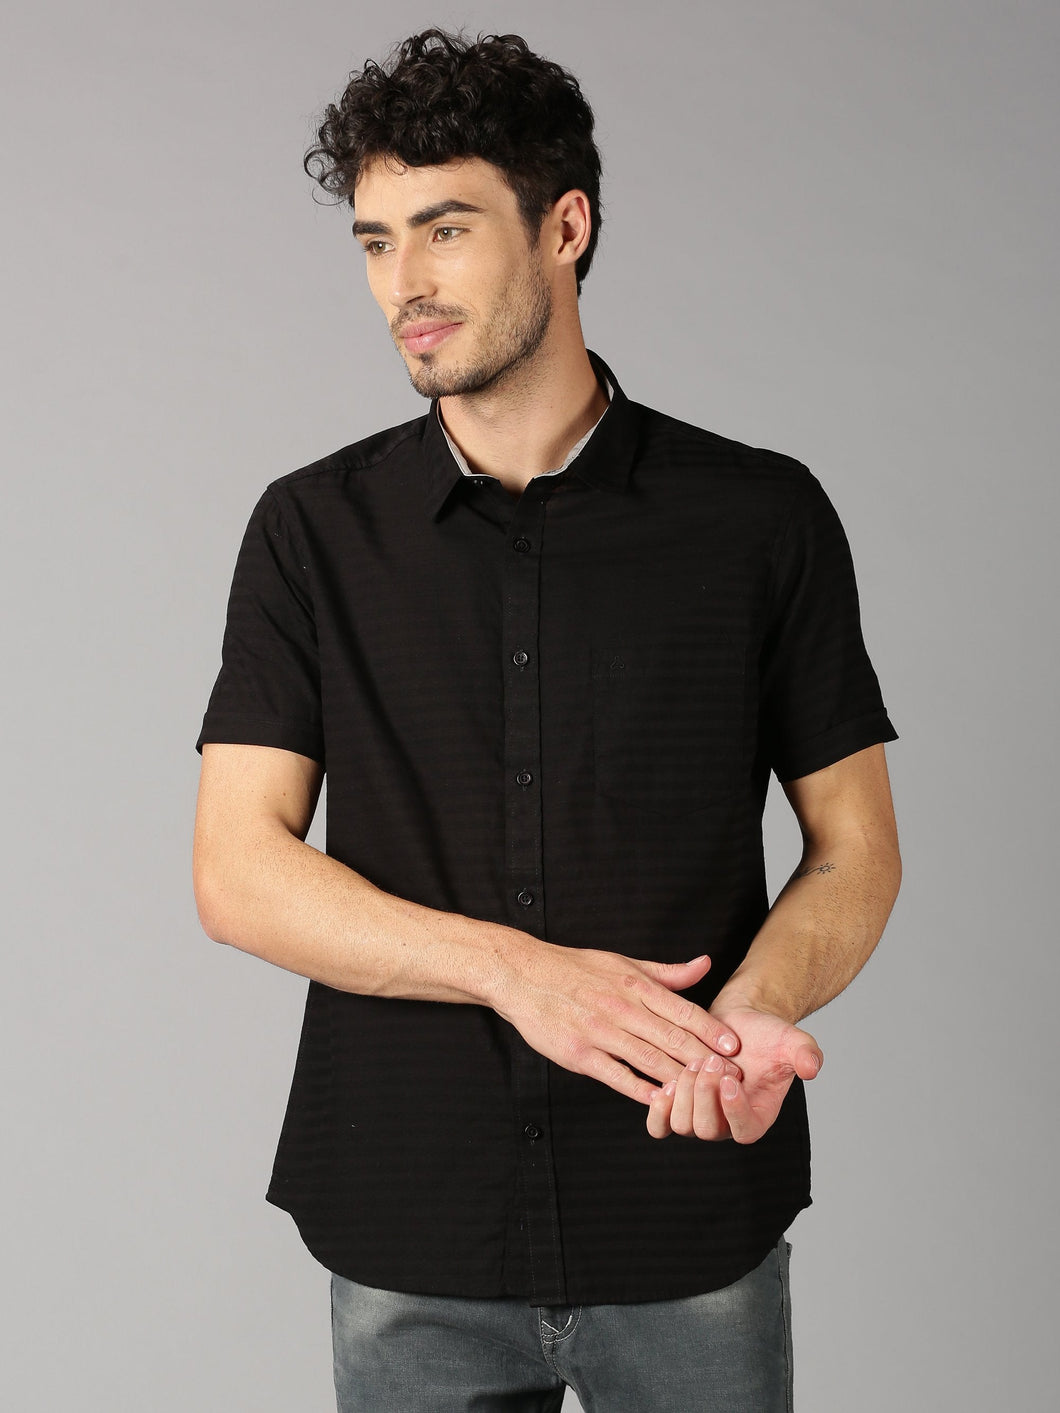 Polycotton Black color Half Sleeve Formal shirt